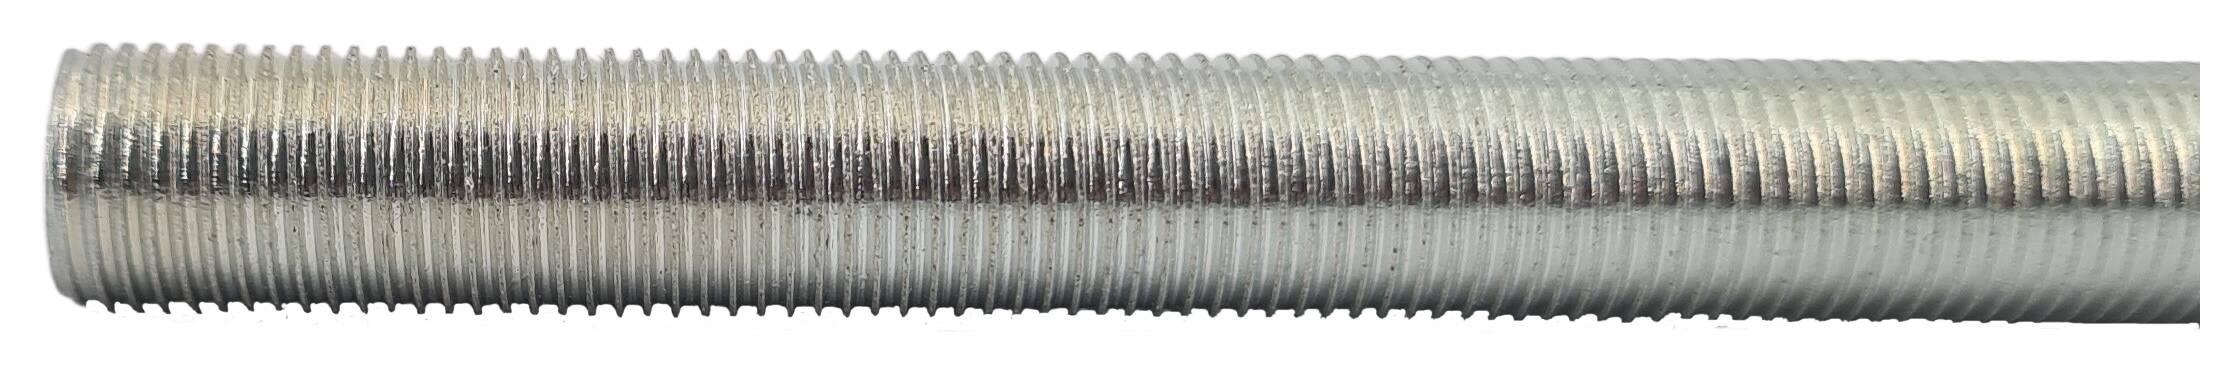 iron thread tube M10x1x245 round zinc